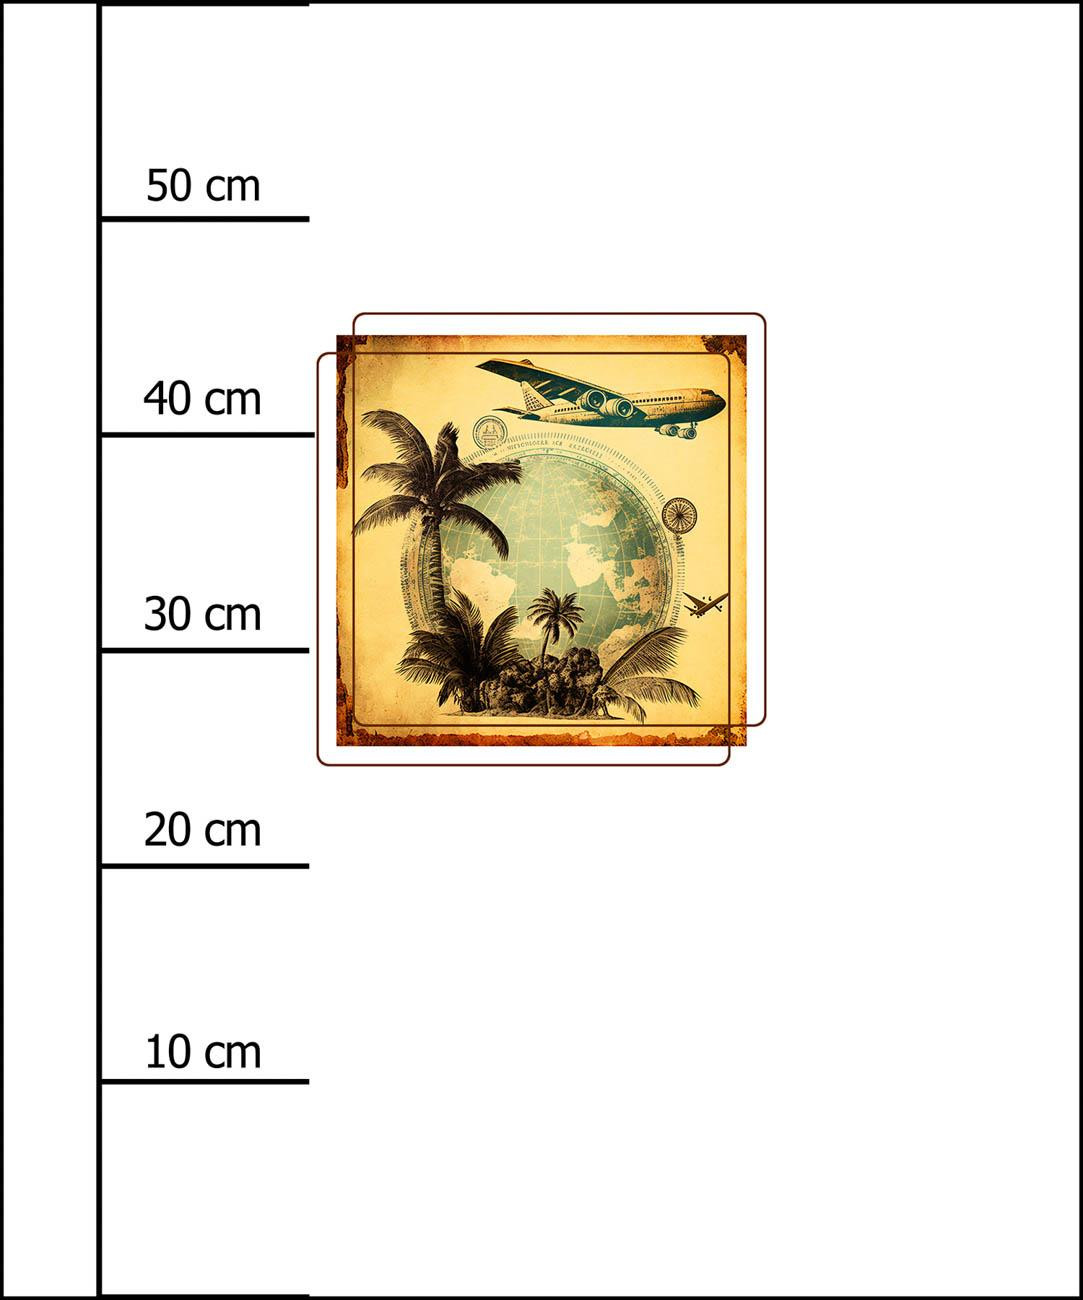 TRAVEL TIME MS. 7 - Panel, Softshell (60cm x 50cm)